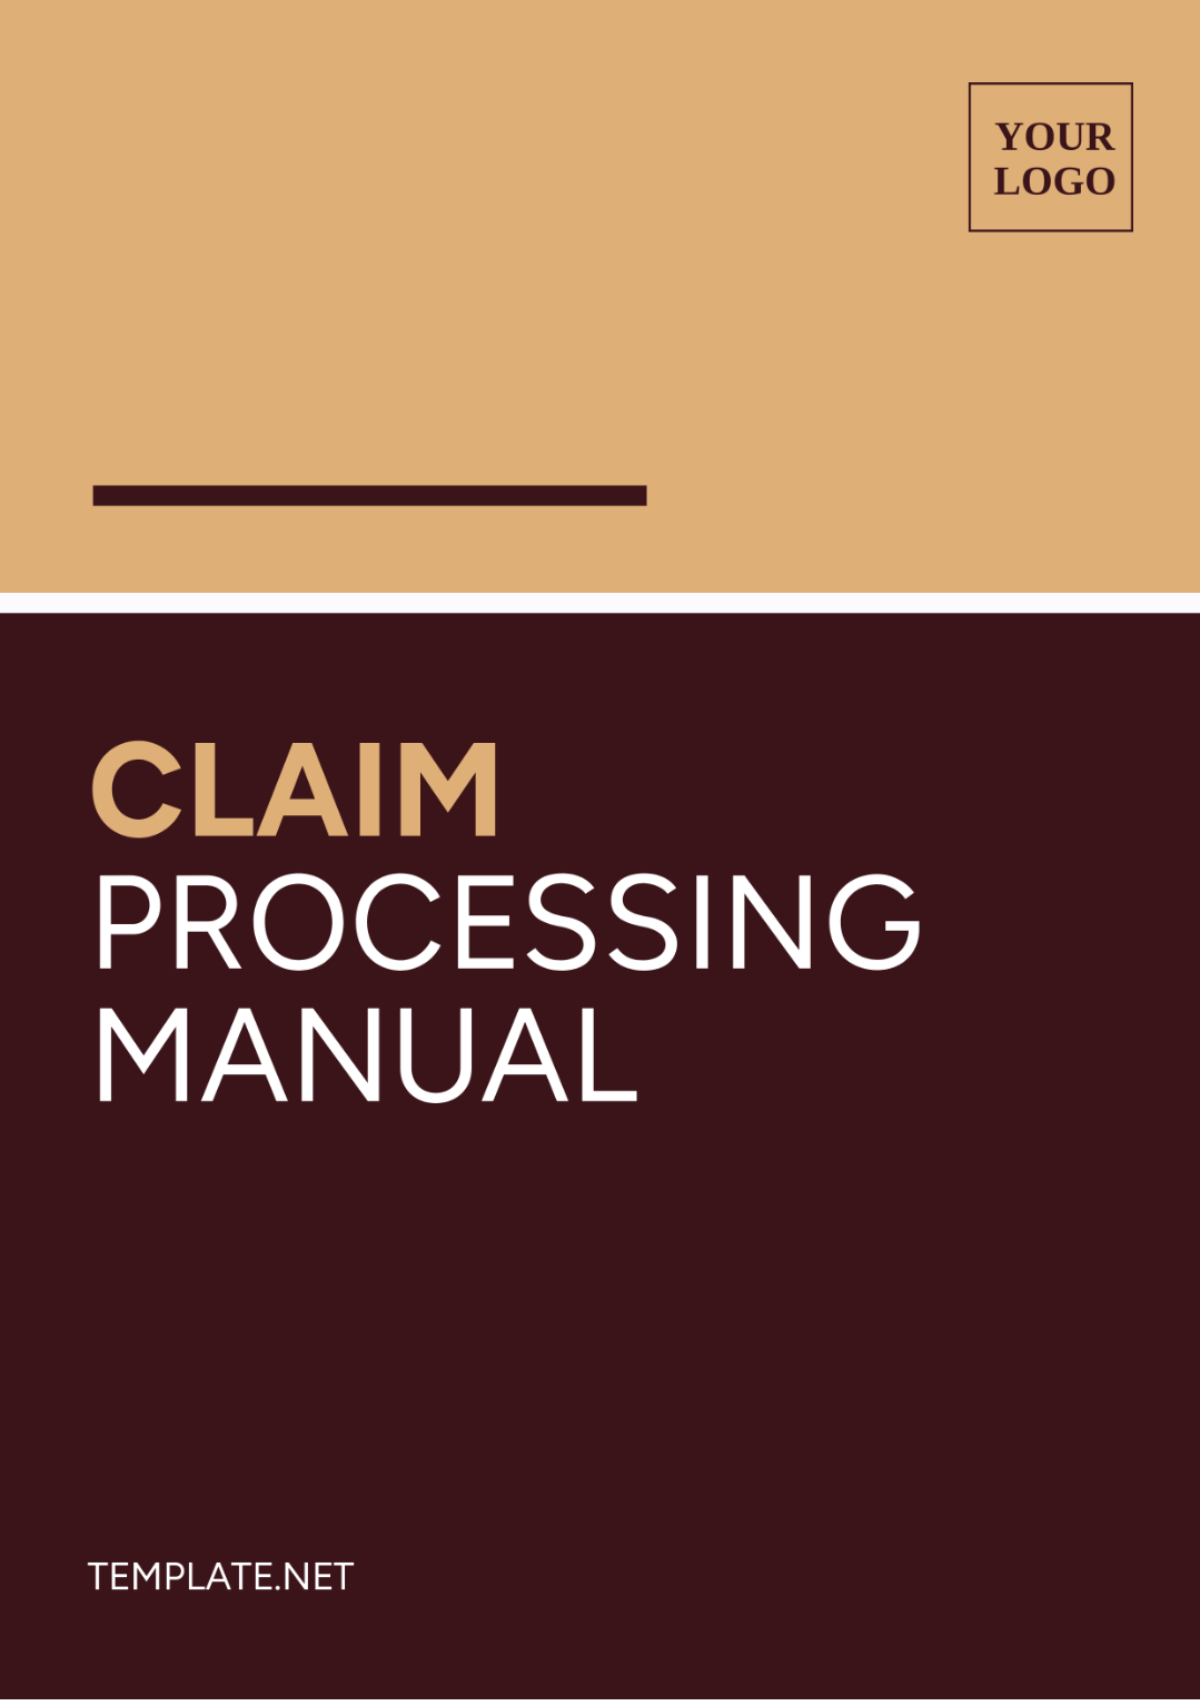 Claim Processing Manual Template